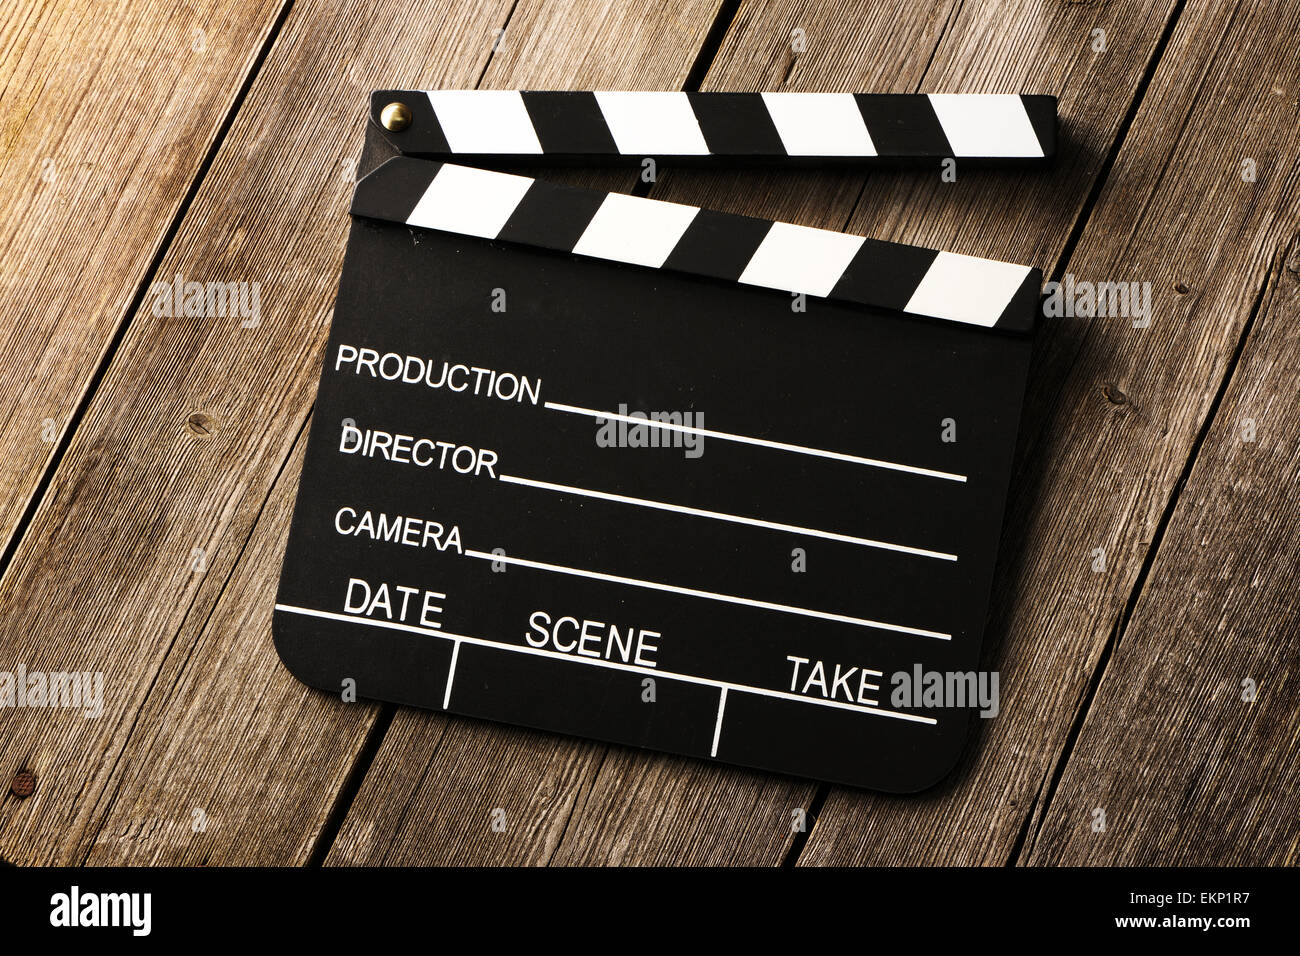 Movie production clapper board Stock Photo